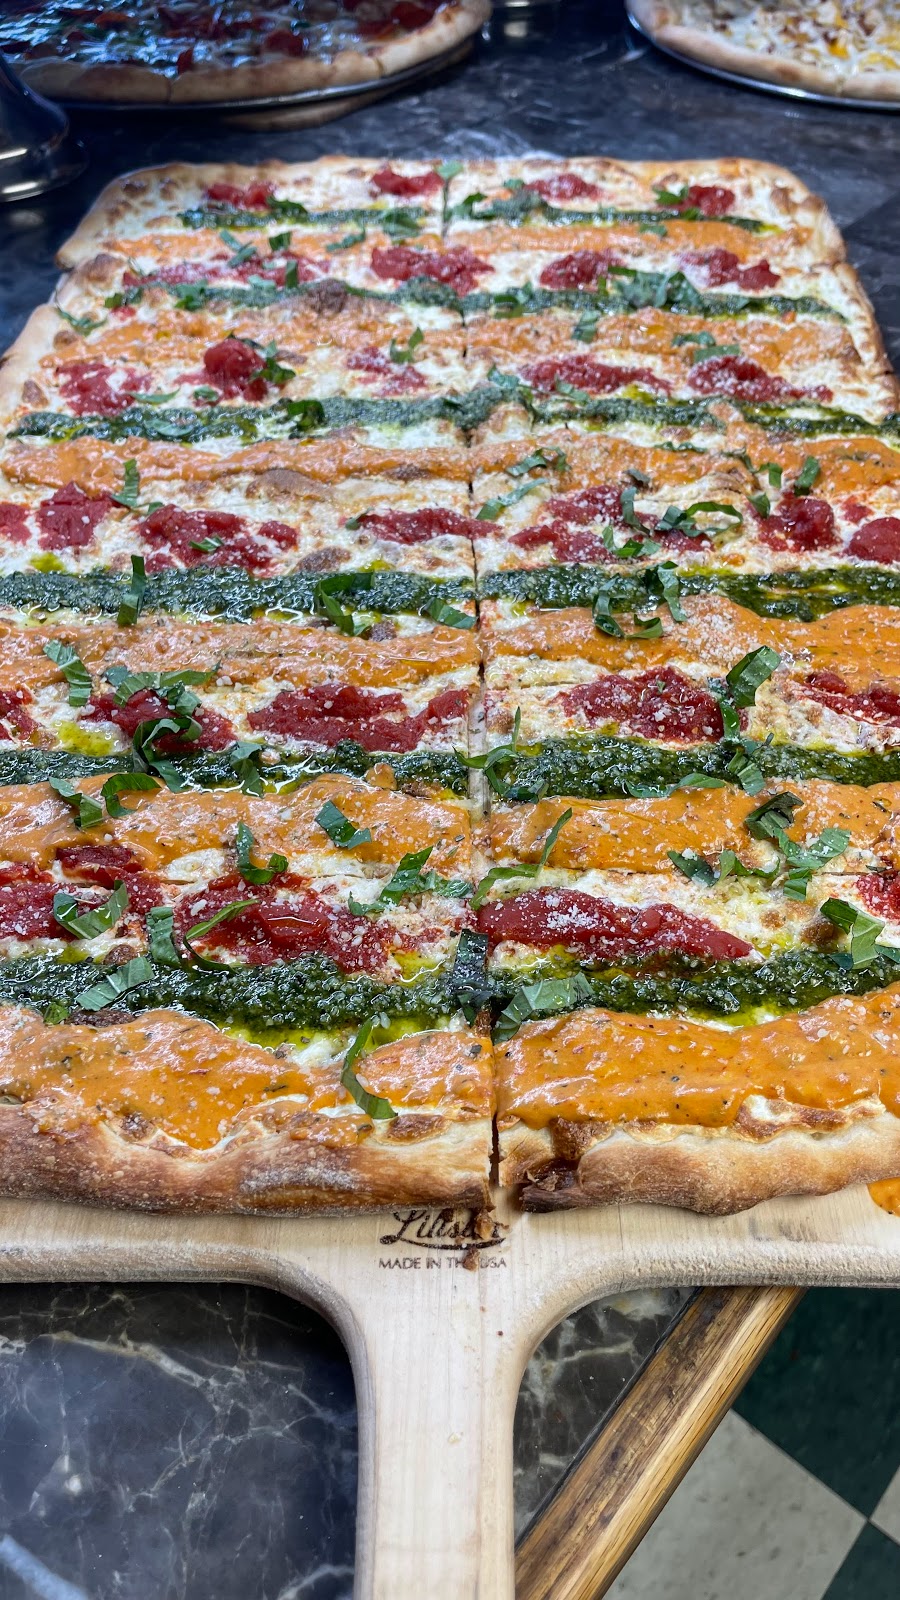 Scalis Pizza & Pasta | 974 Columbia St, Hudson, NY 12534 | Phone: (518) 828-9186